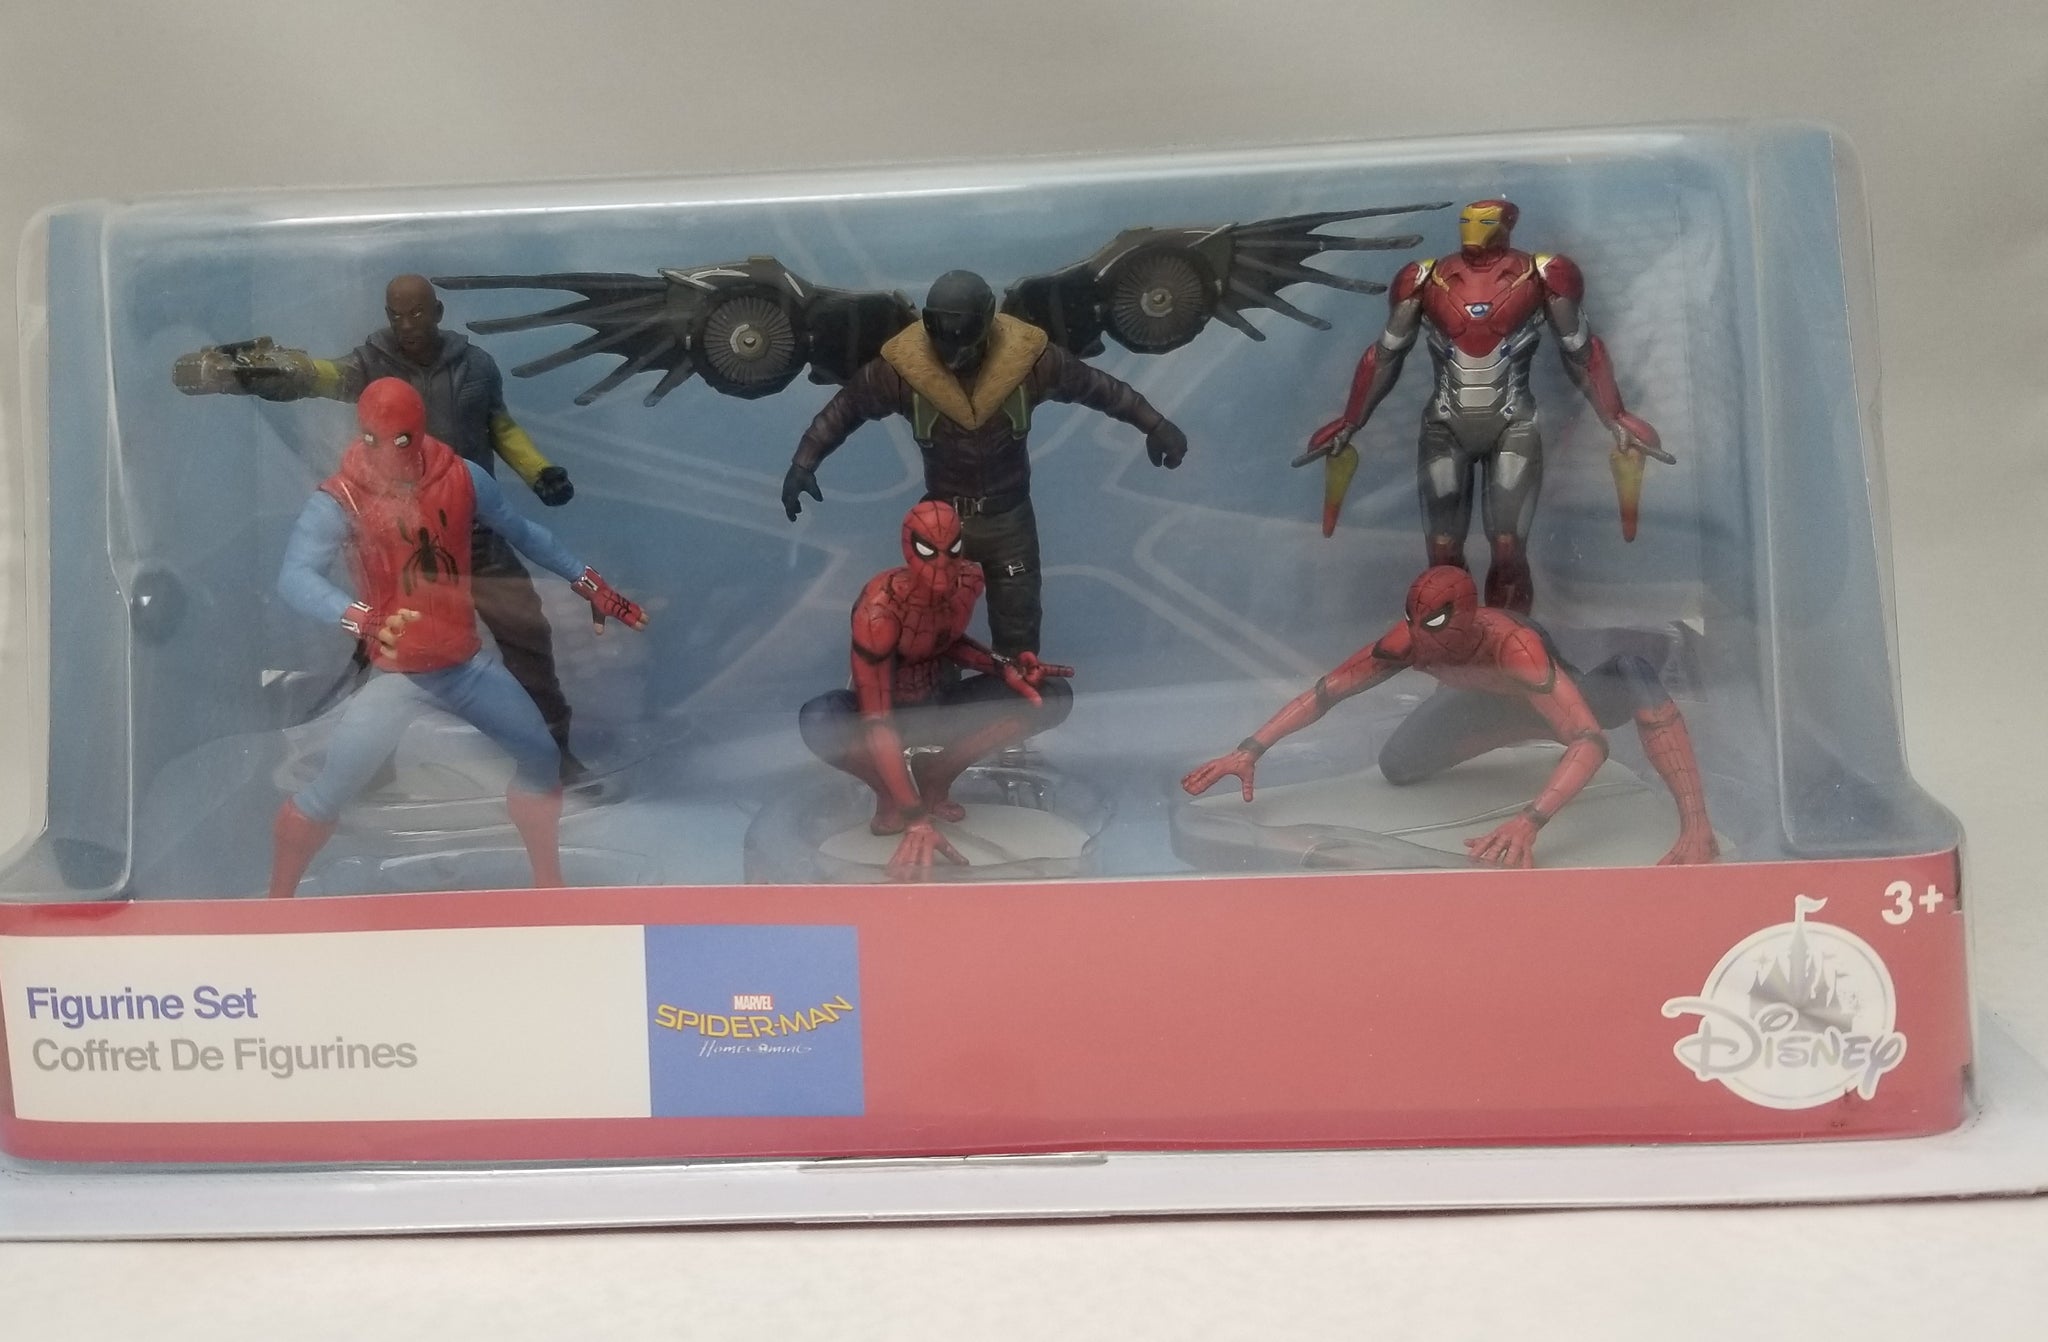 Coffret de figurines Spider-Man